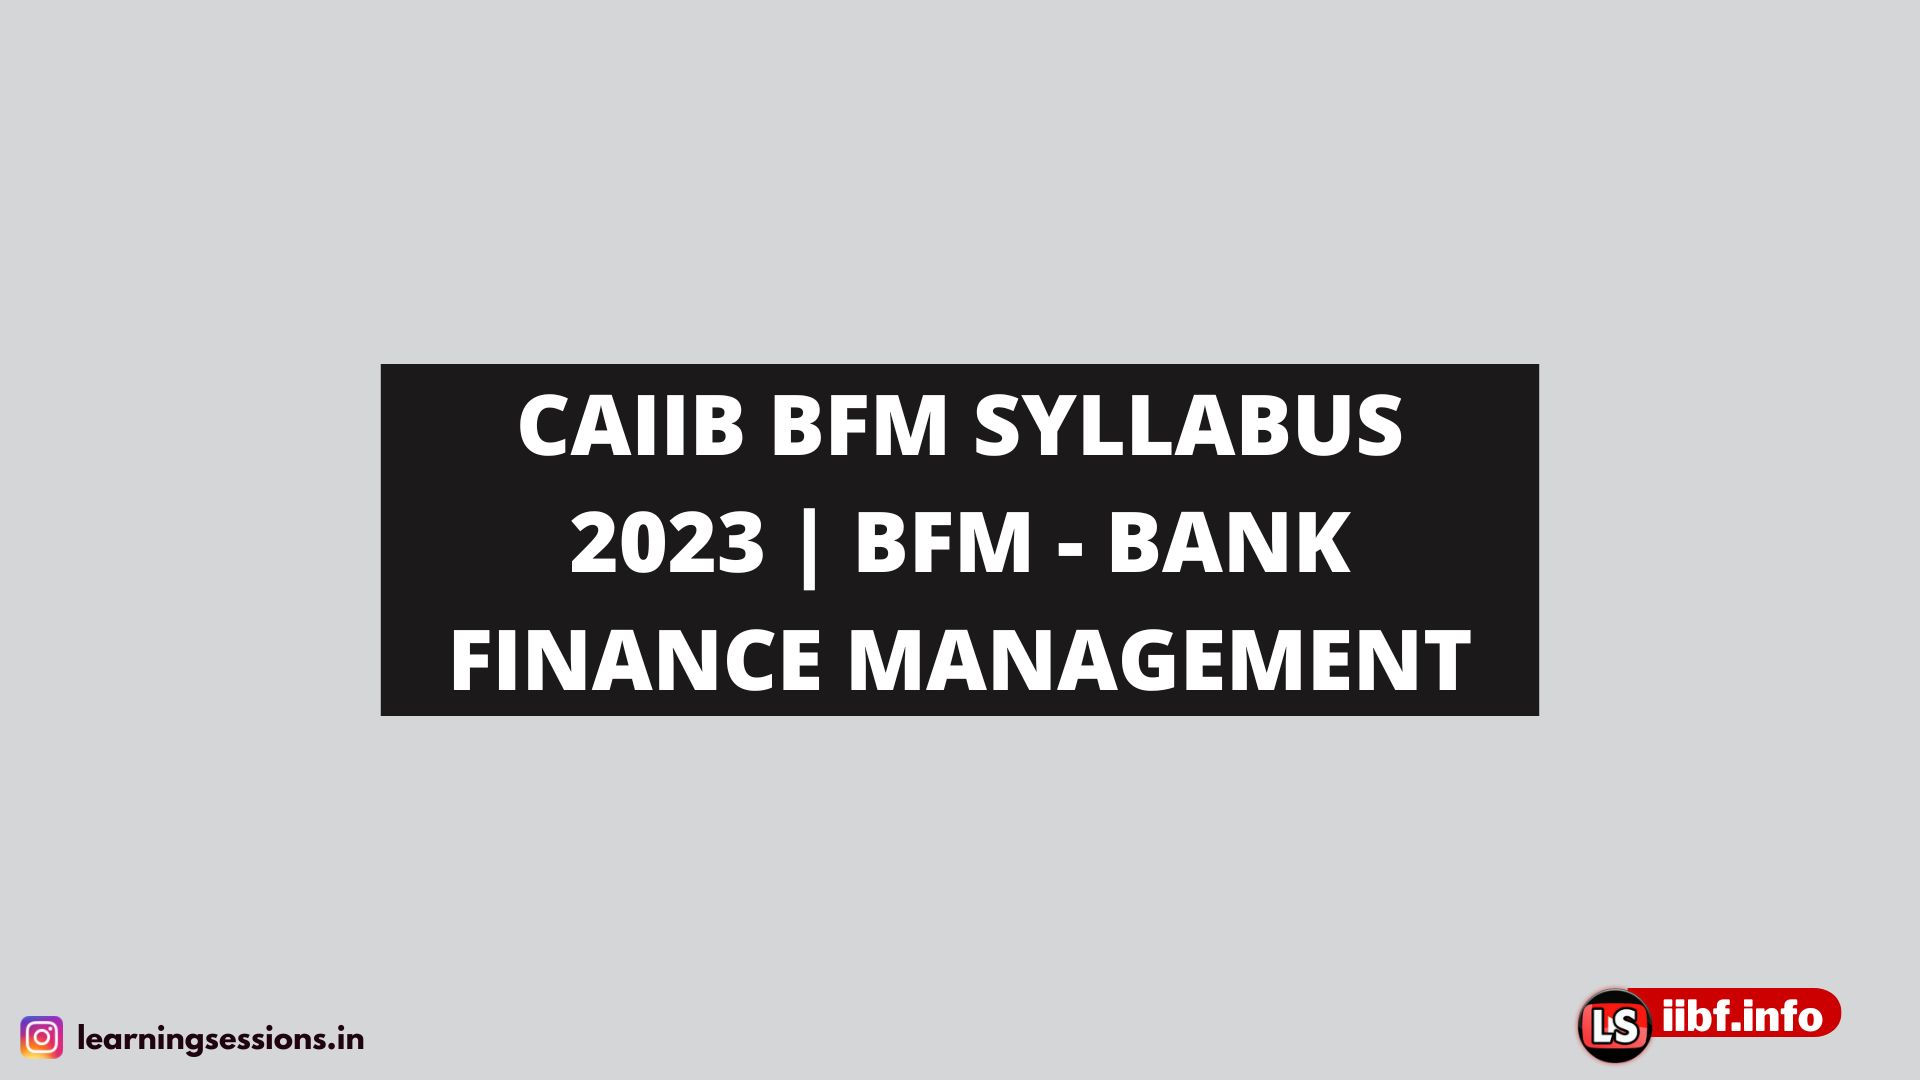 CAIIB BFM SYLLABUS 2023 | BFM - BANK FINANCE MANAGEMENT